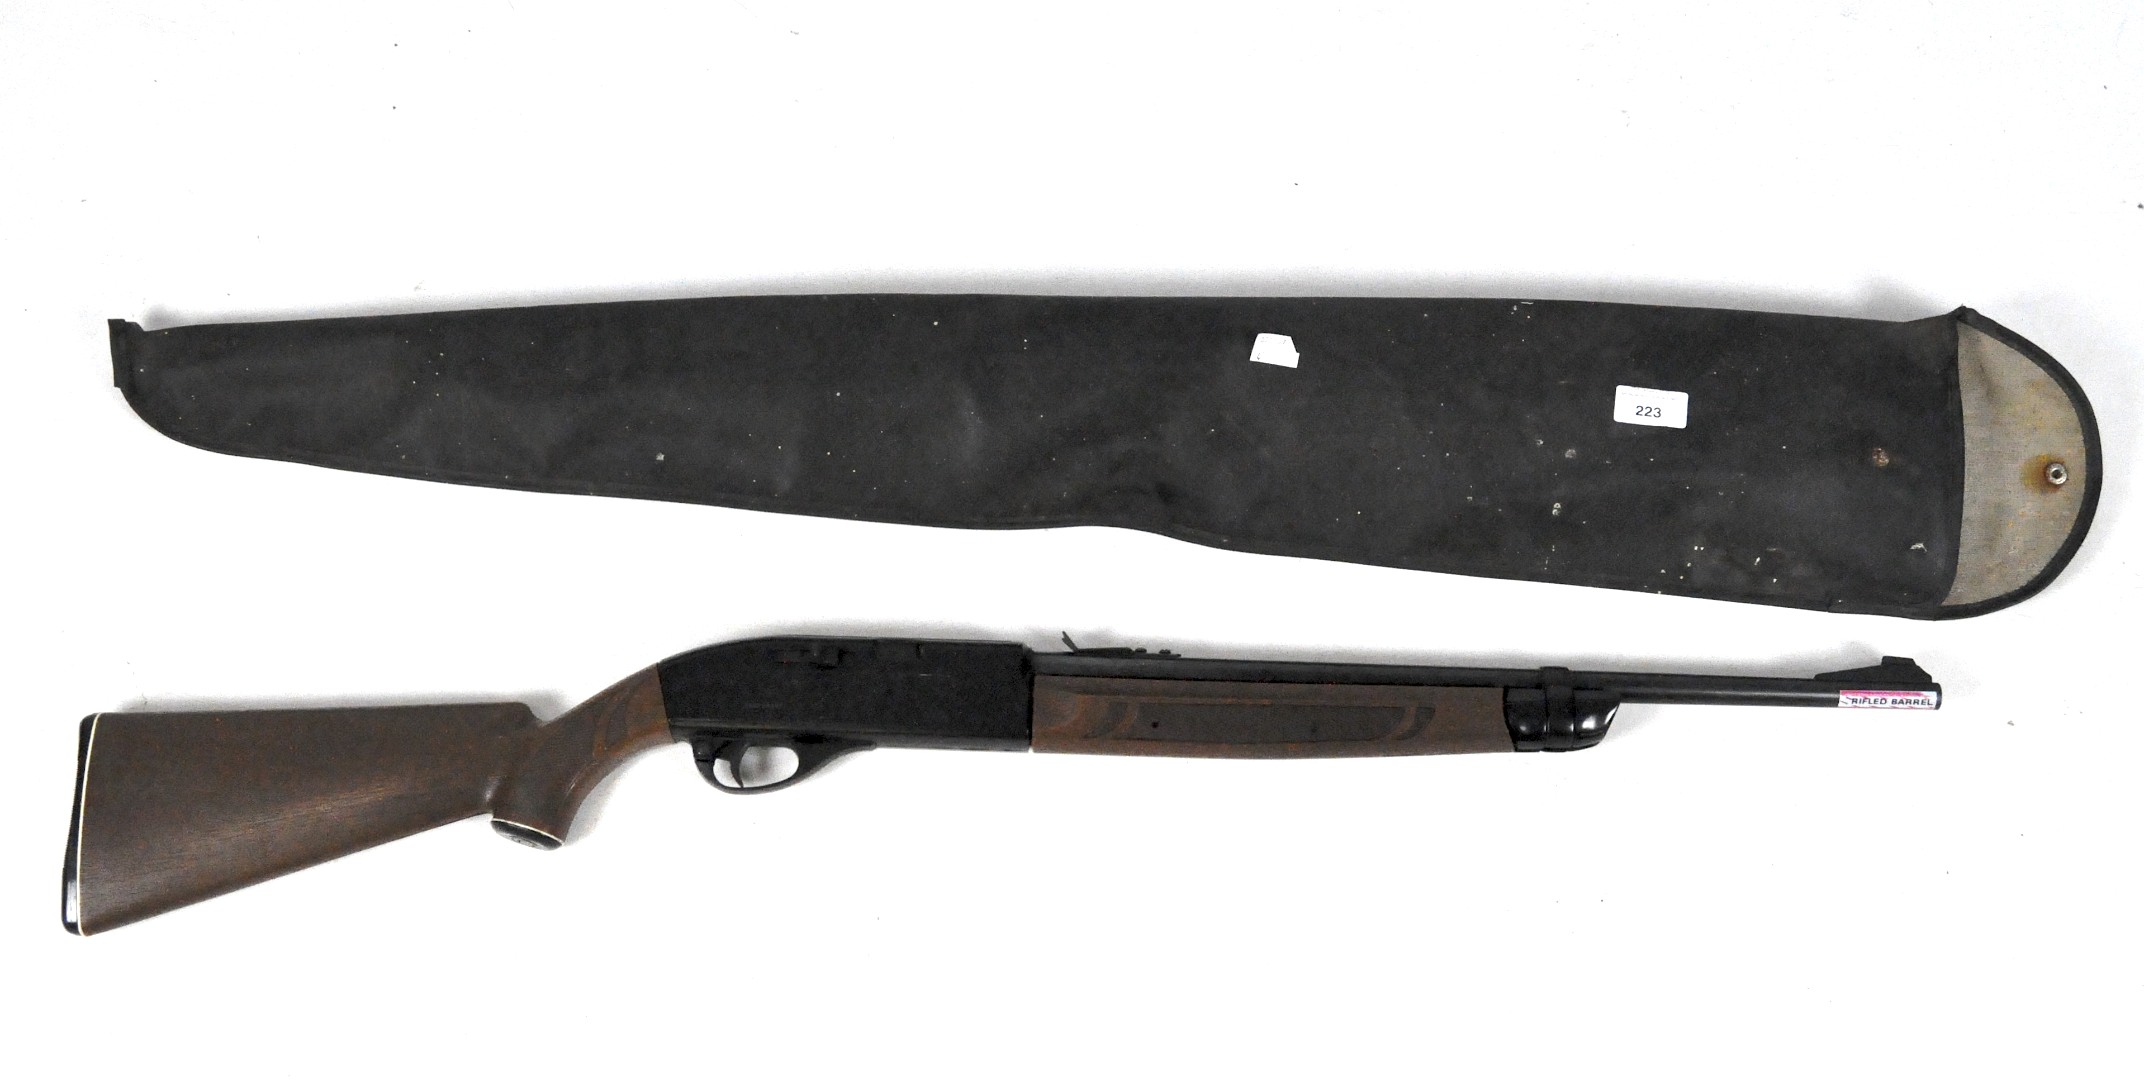 A Crosman (USA) 766 B B gun, in a case